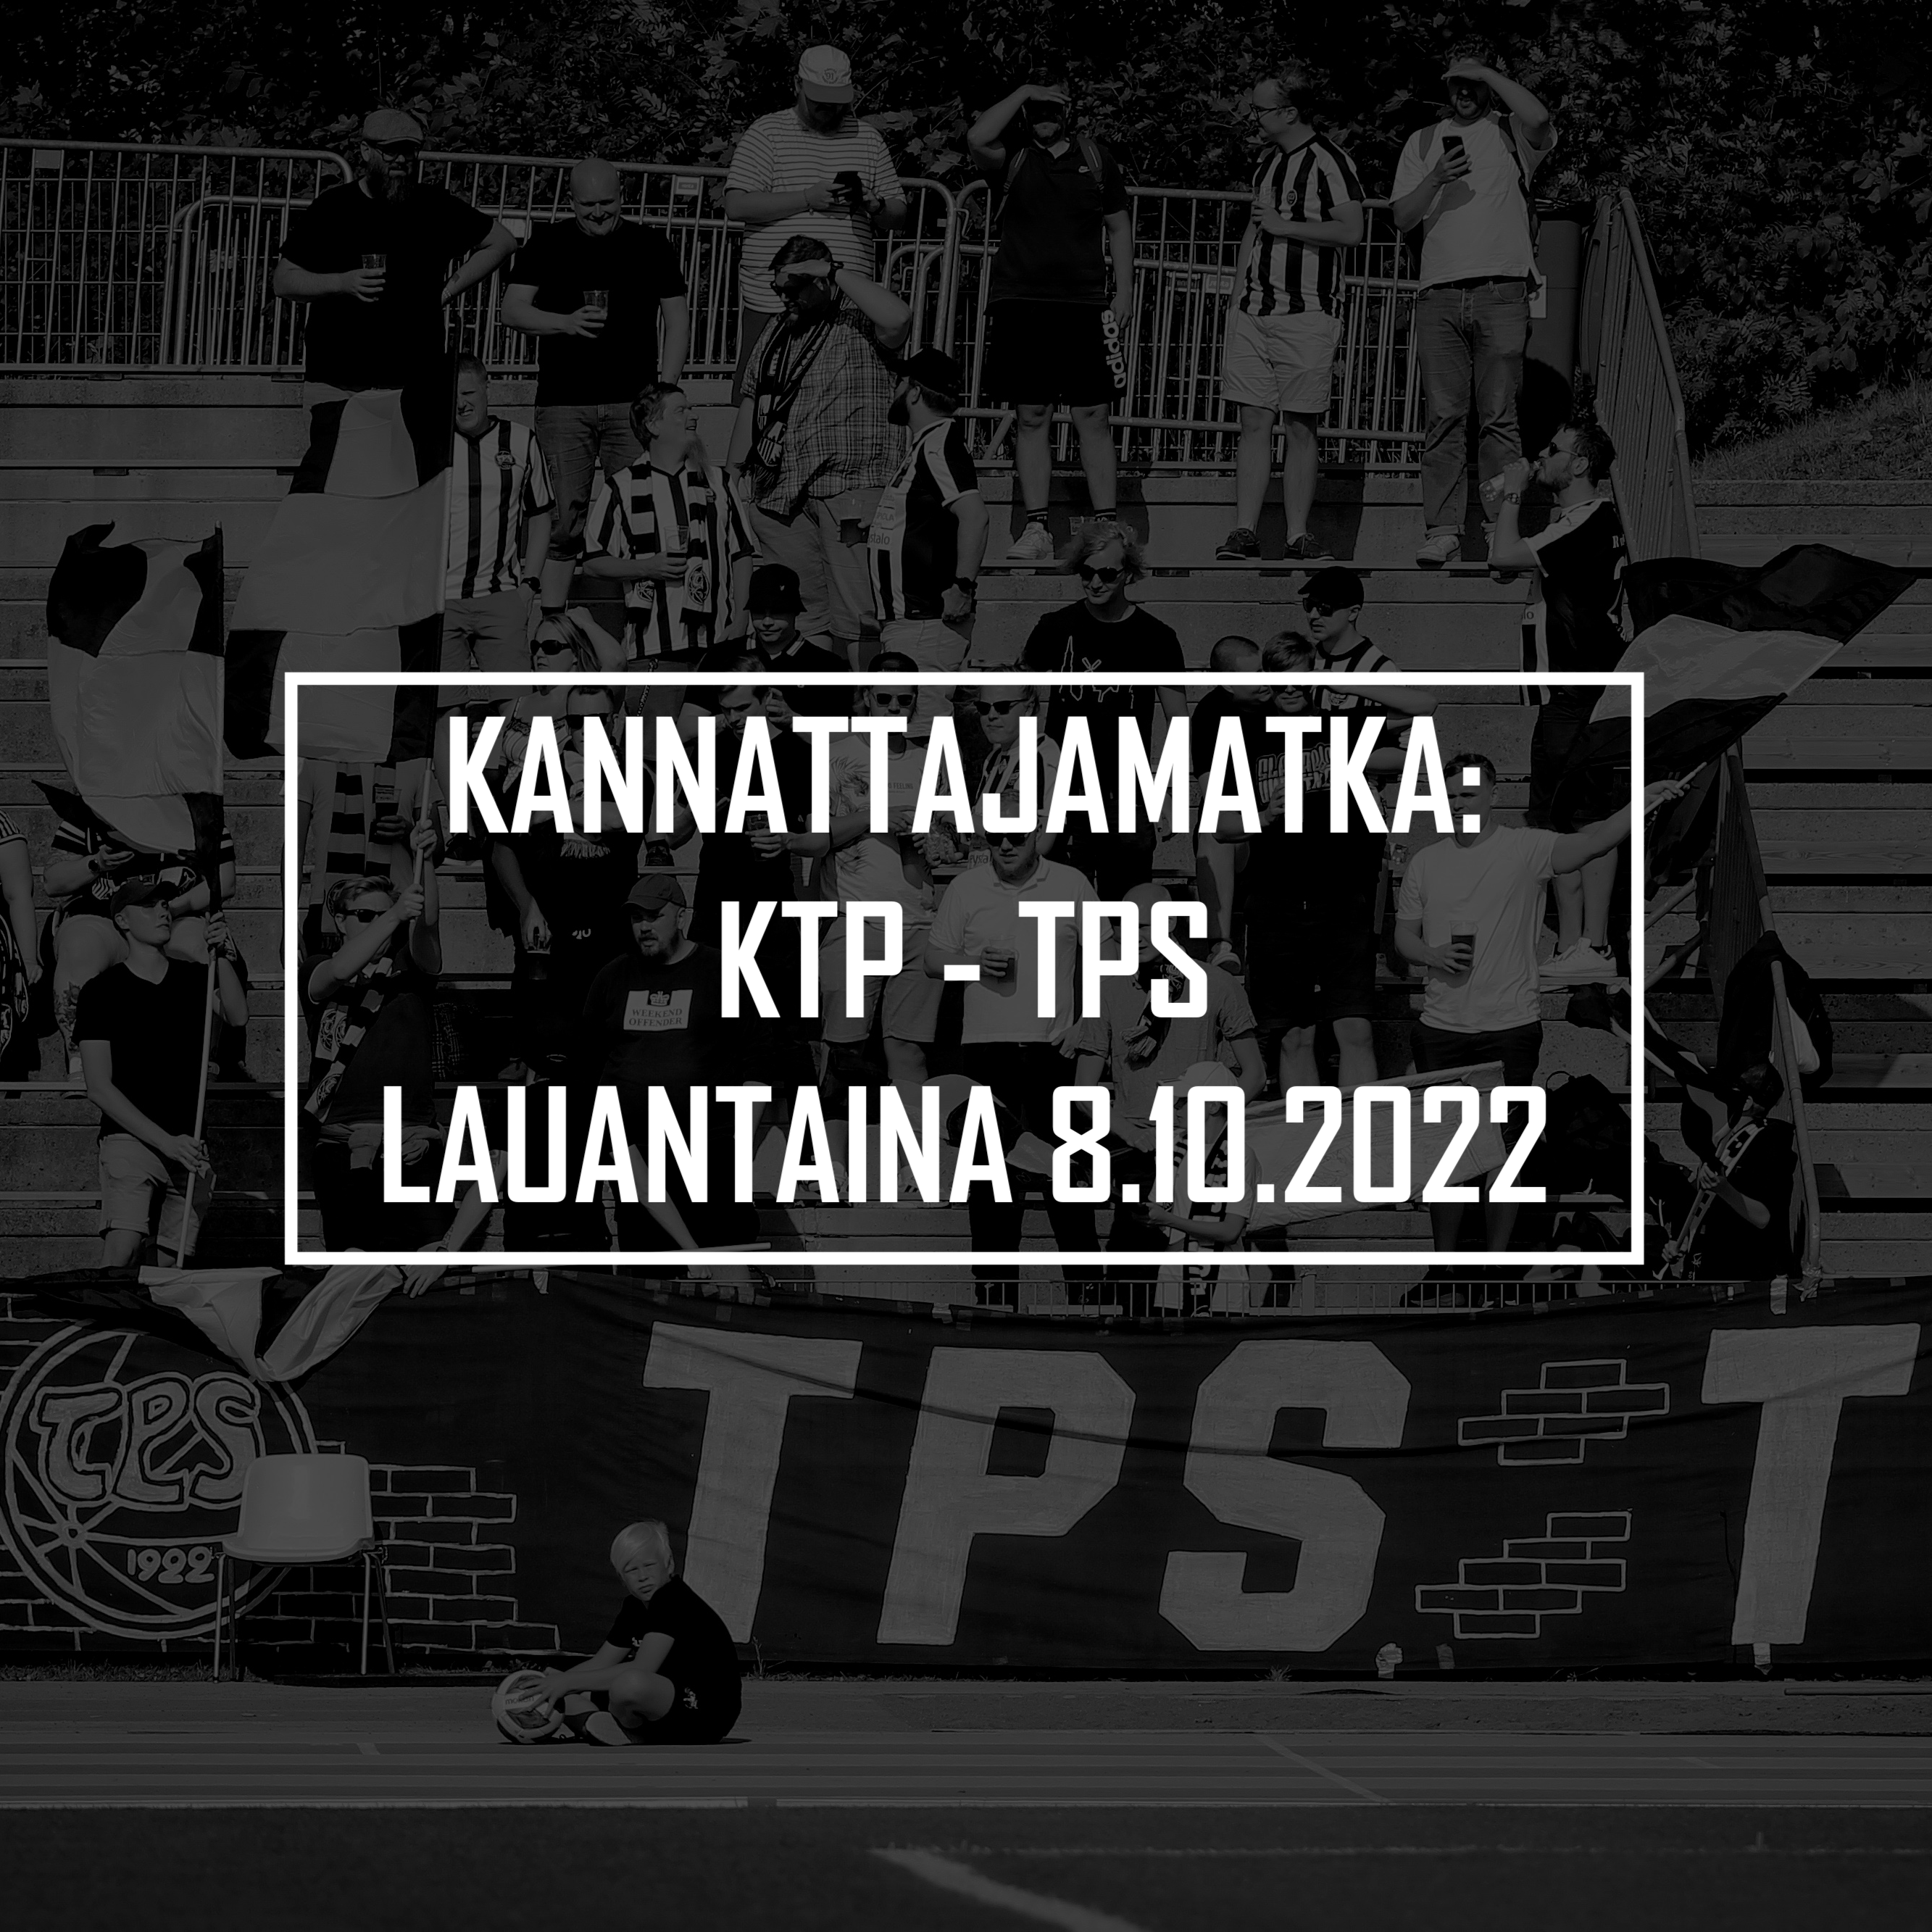 Kannattajamatka: KTP – TPS 8.10.2022